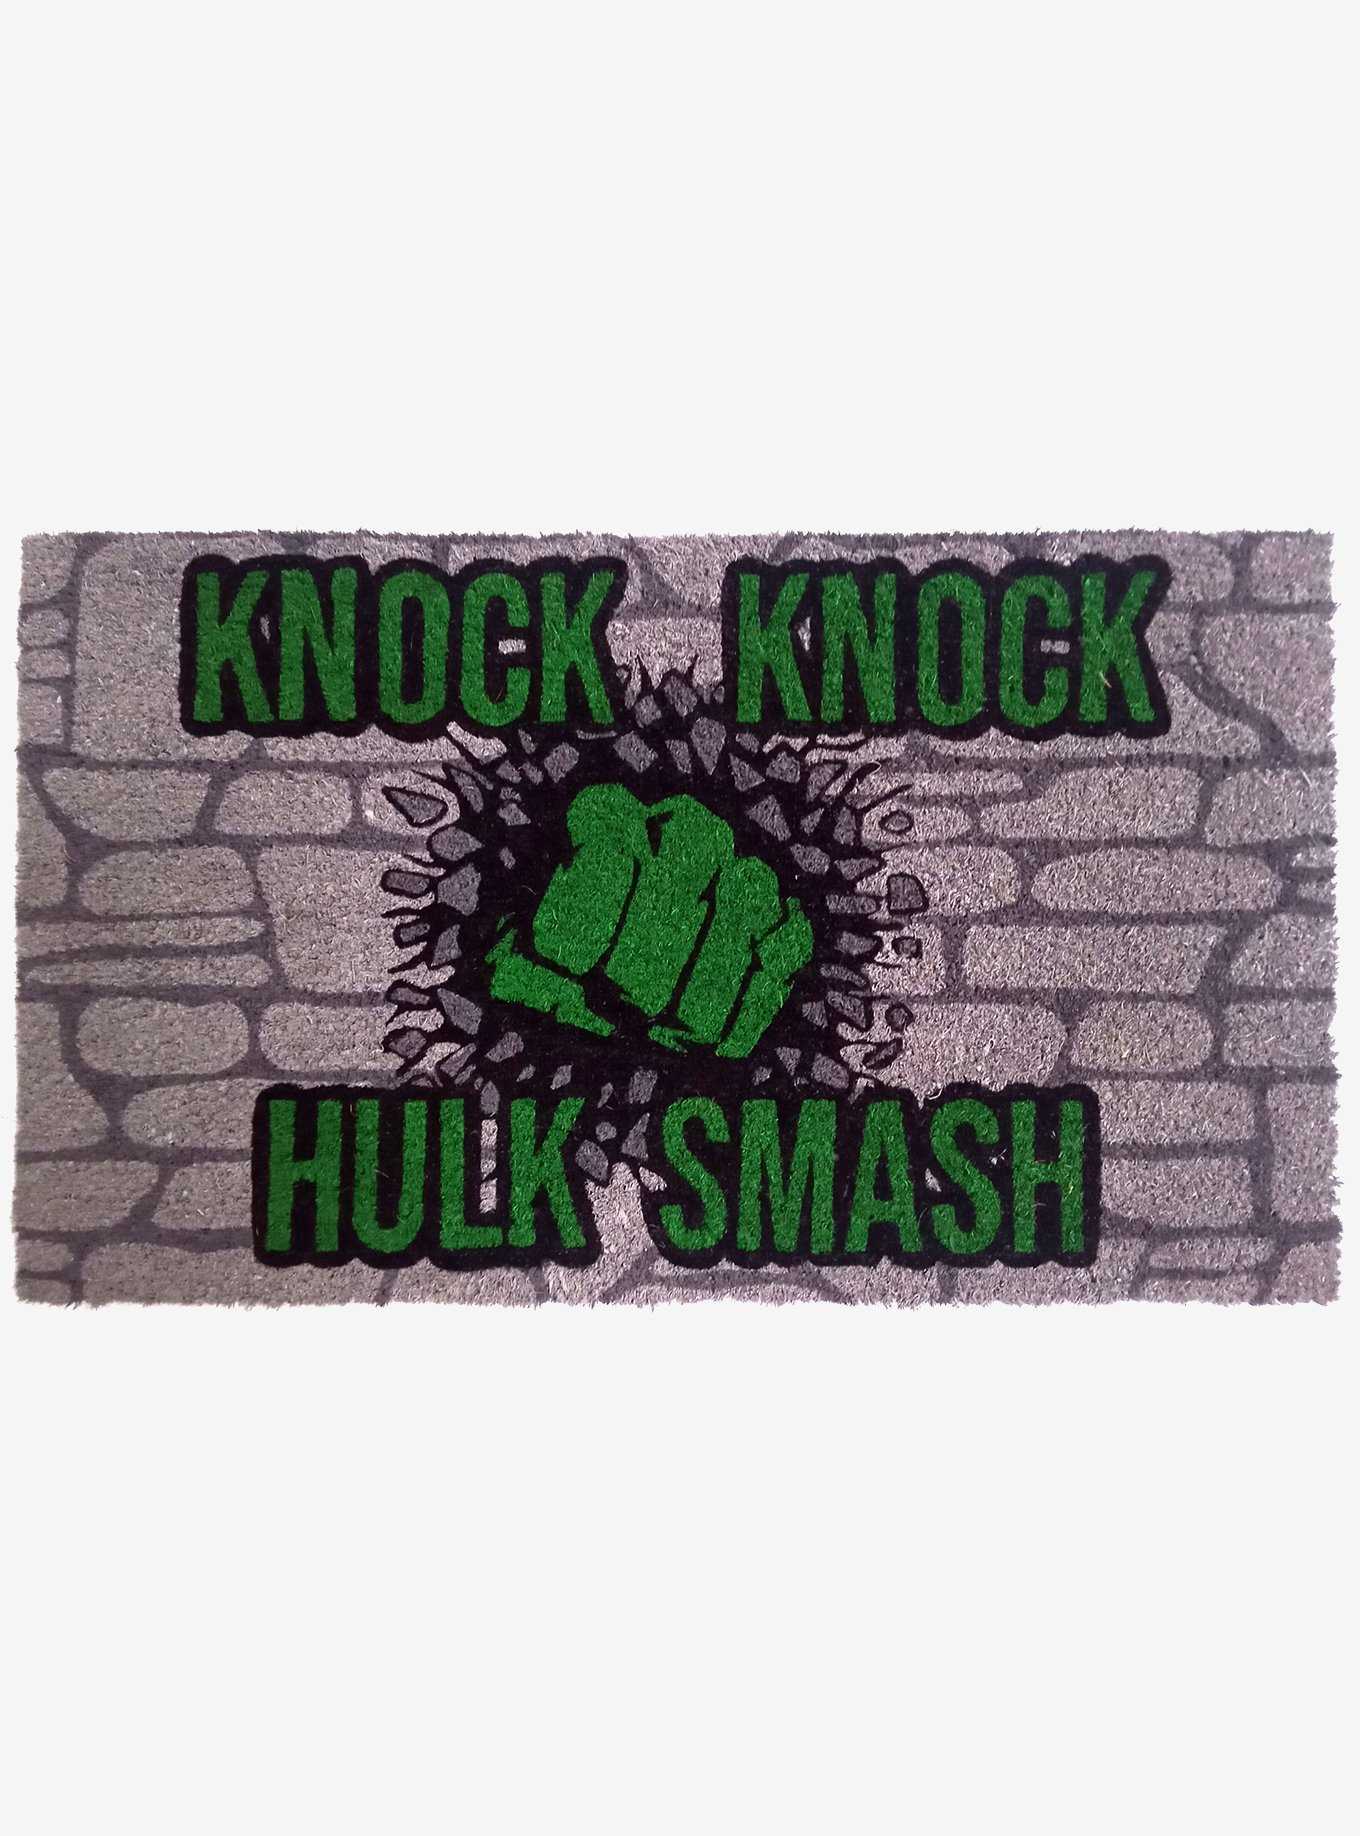 Marvel Hulk Knock Knock Hulk Smash Doormat, , hi-res